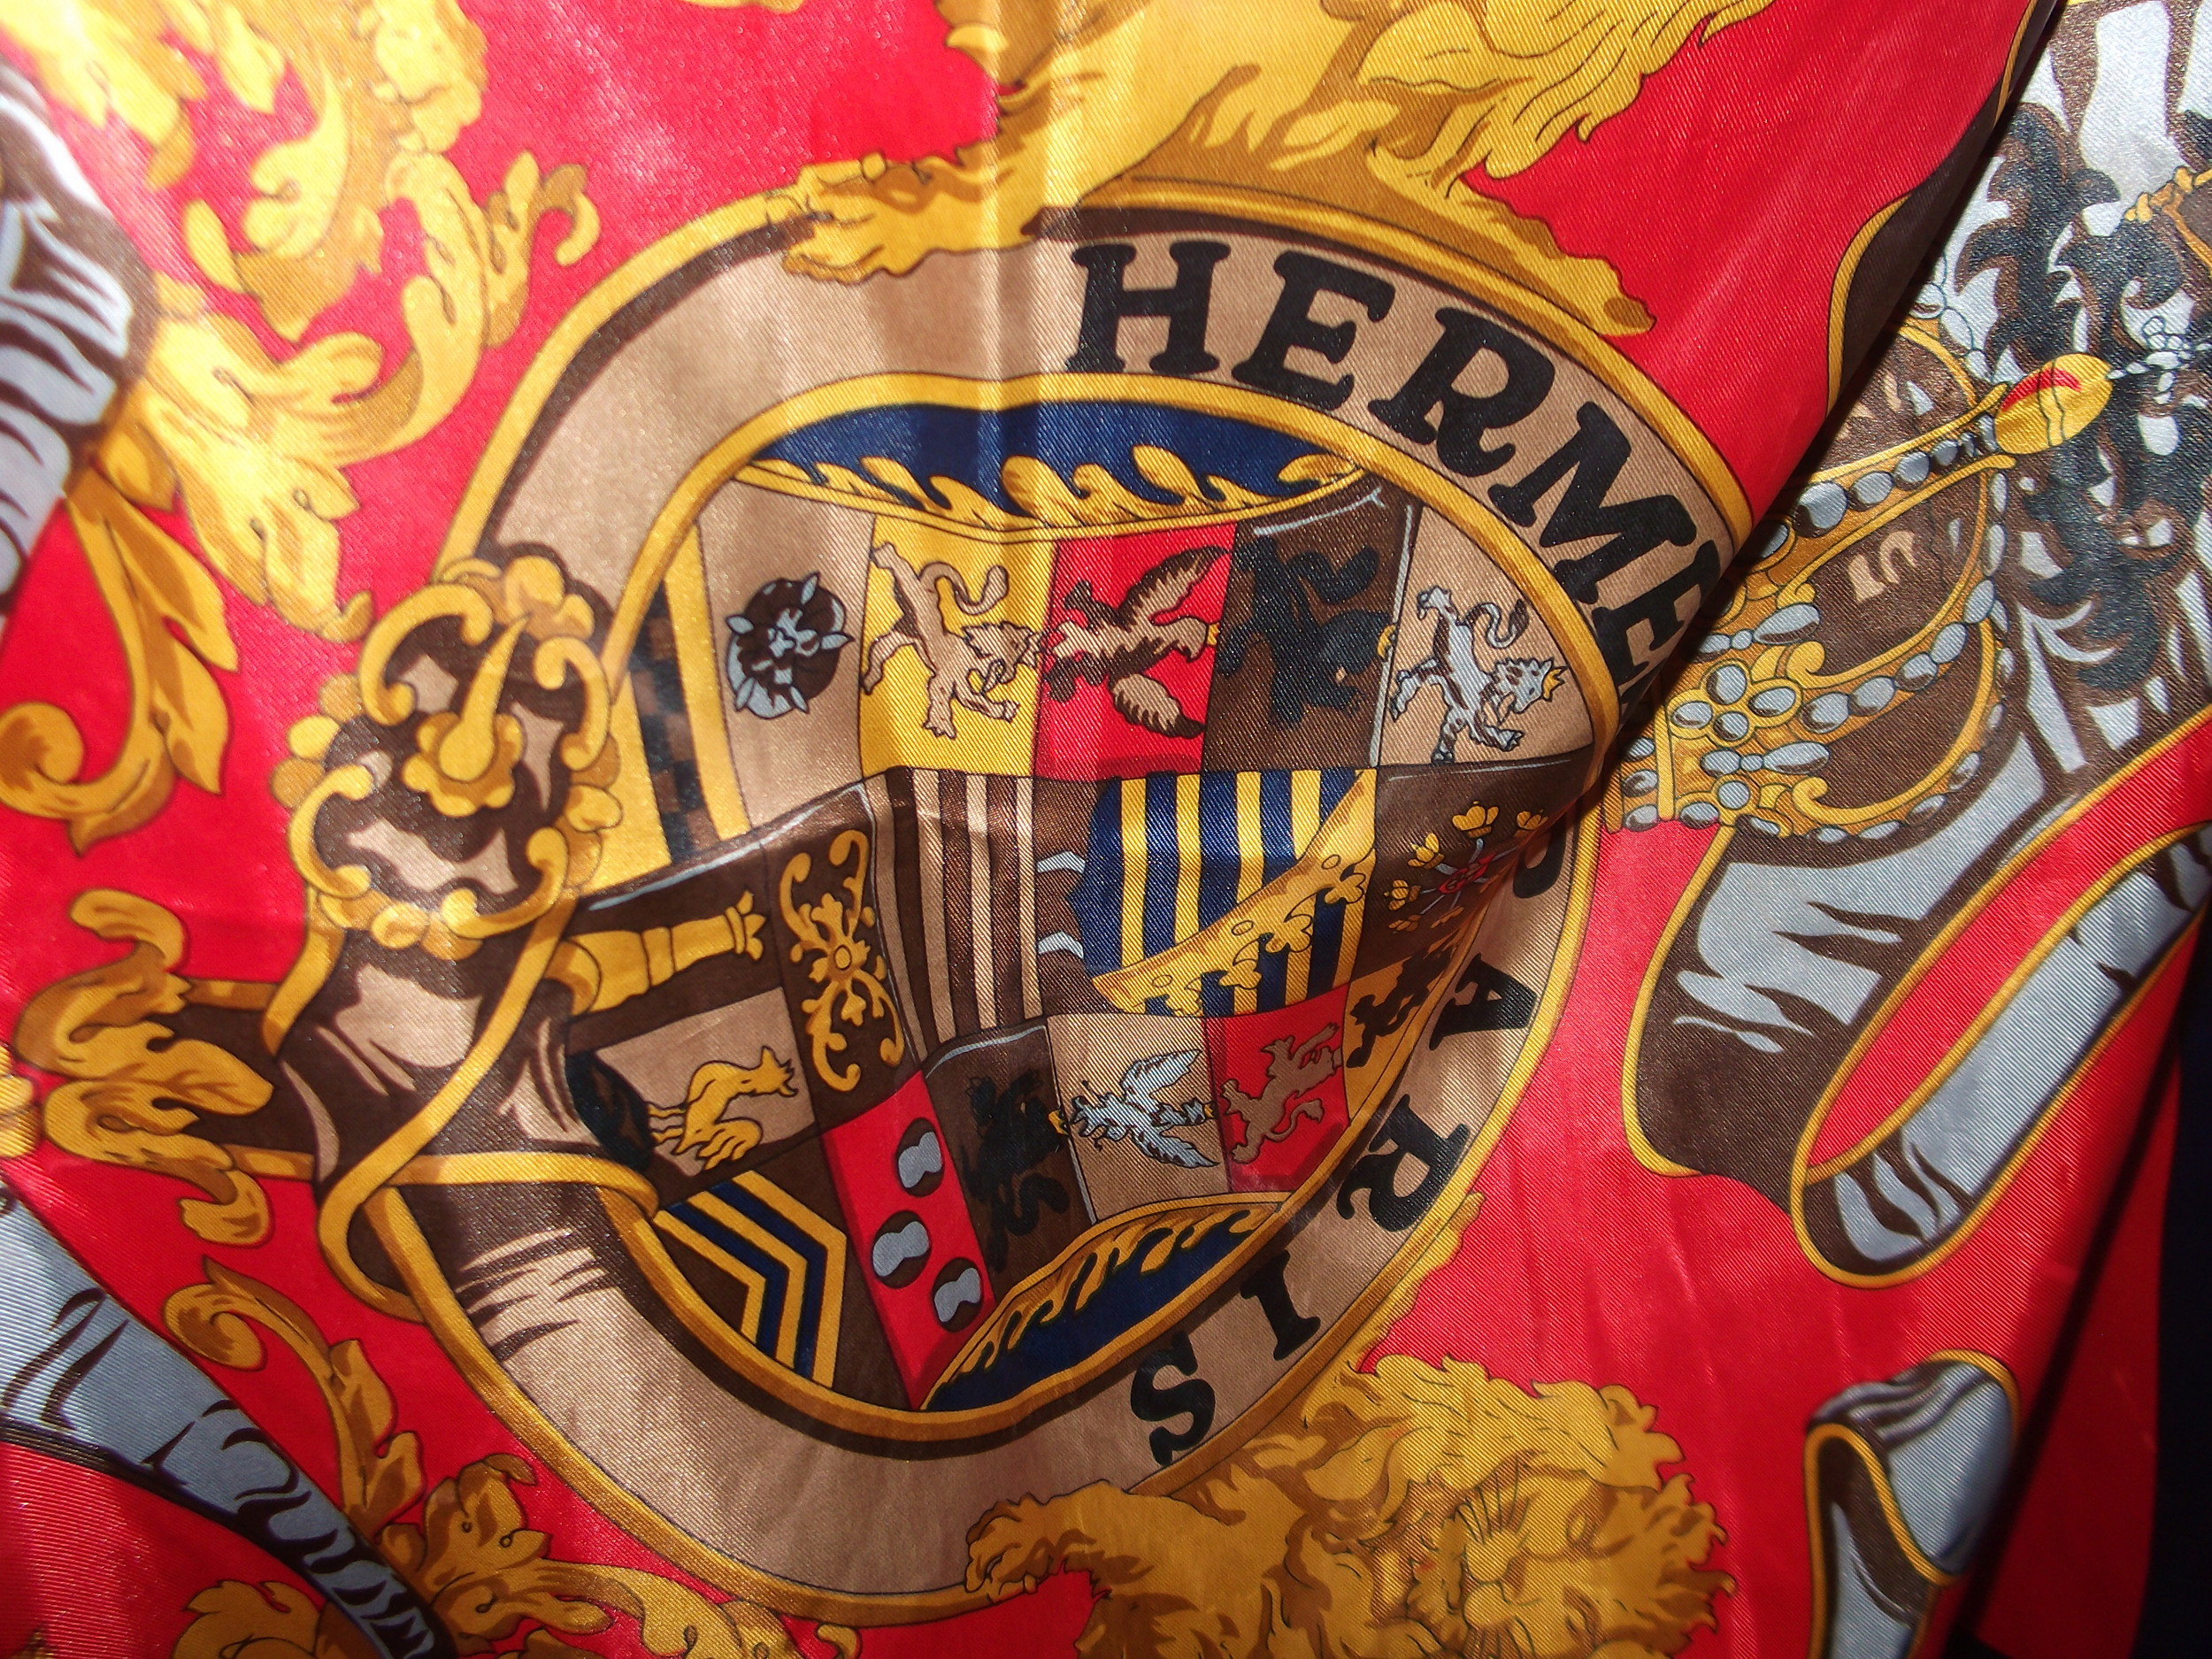 Vintage Hermes Scarf at Pop Up Vintage Fairs London St Stephens Rosslyn Hill Hampstead.JPG